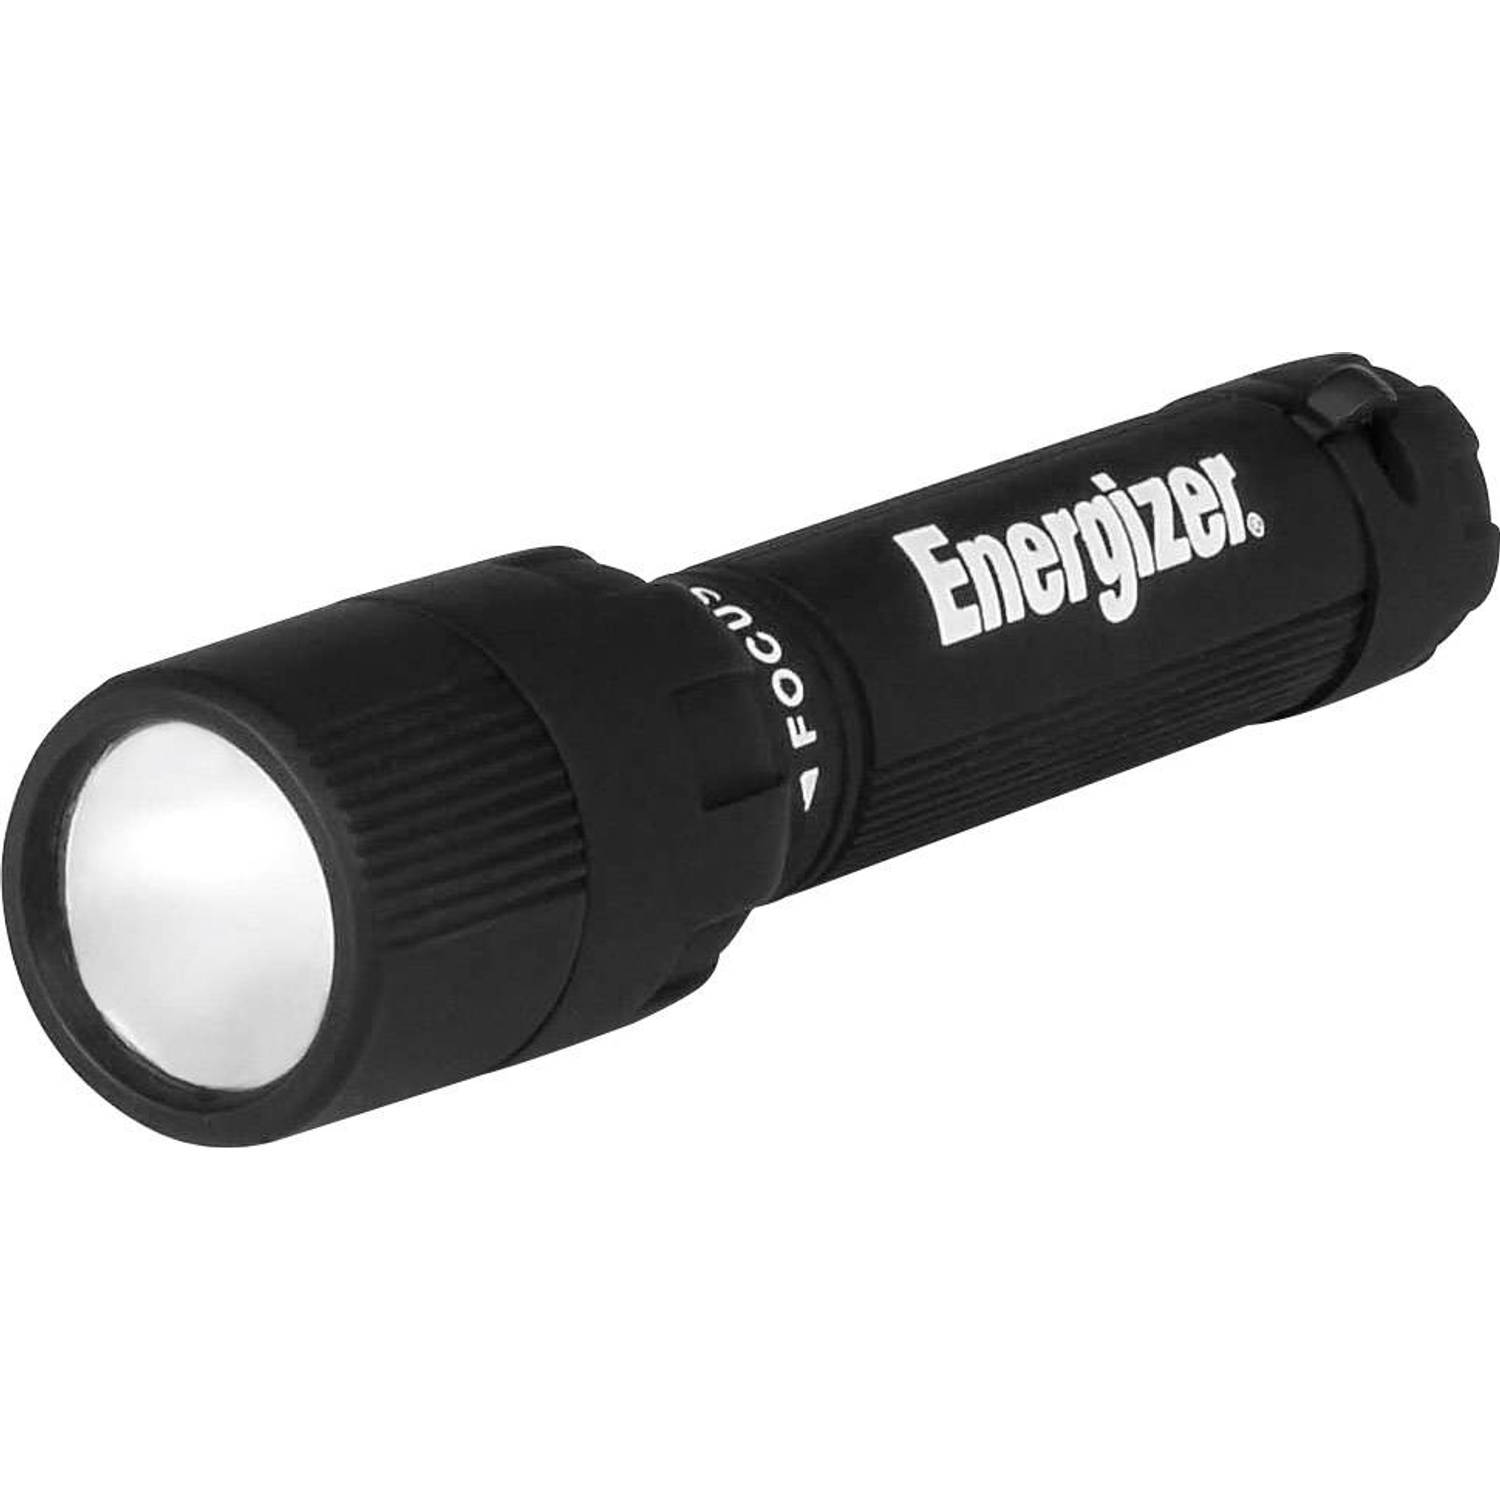 Energizer zaklamp X-Focus 9 cm zwart